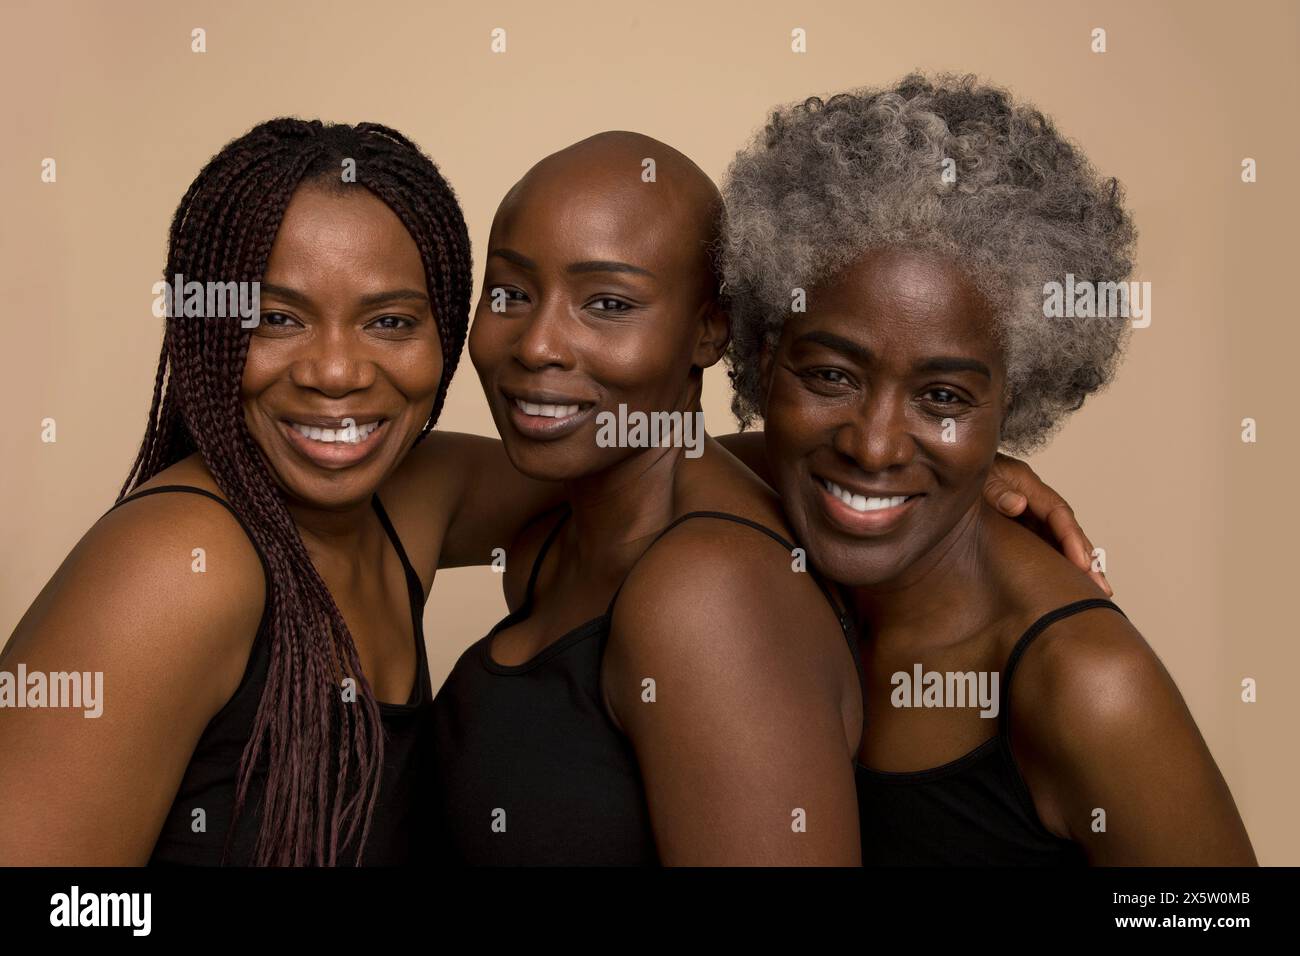 Studio portrait of three smiling women in black tops Stock Photo